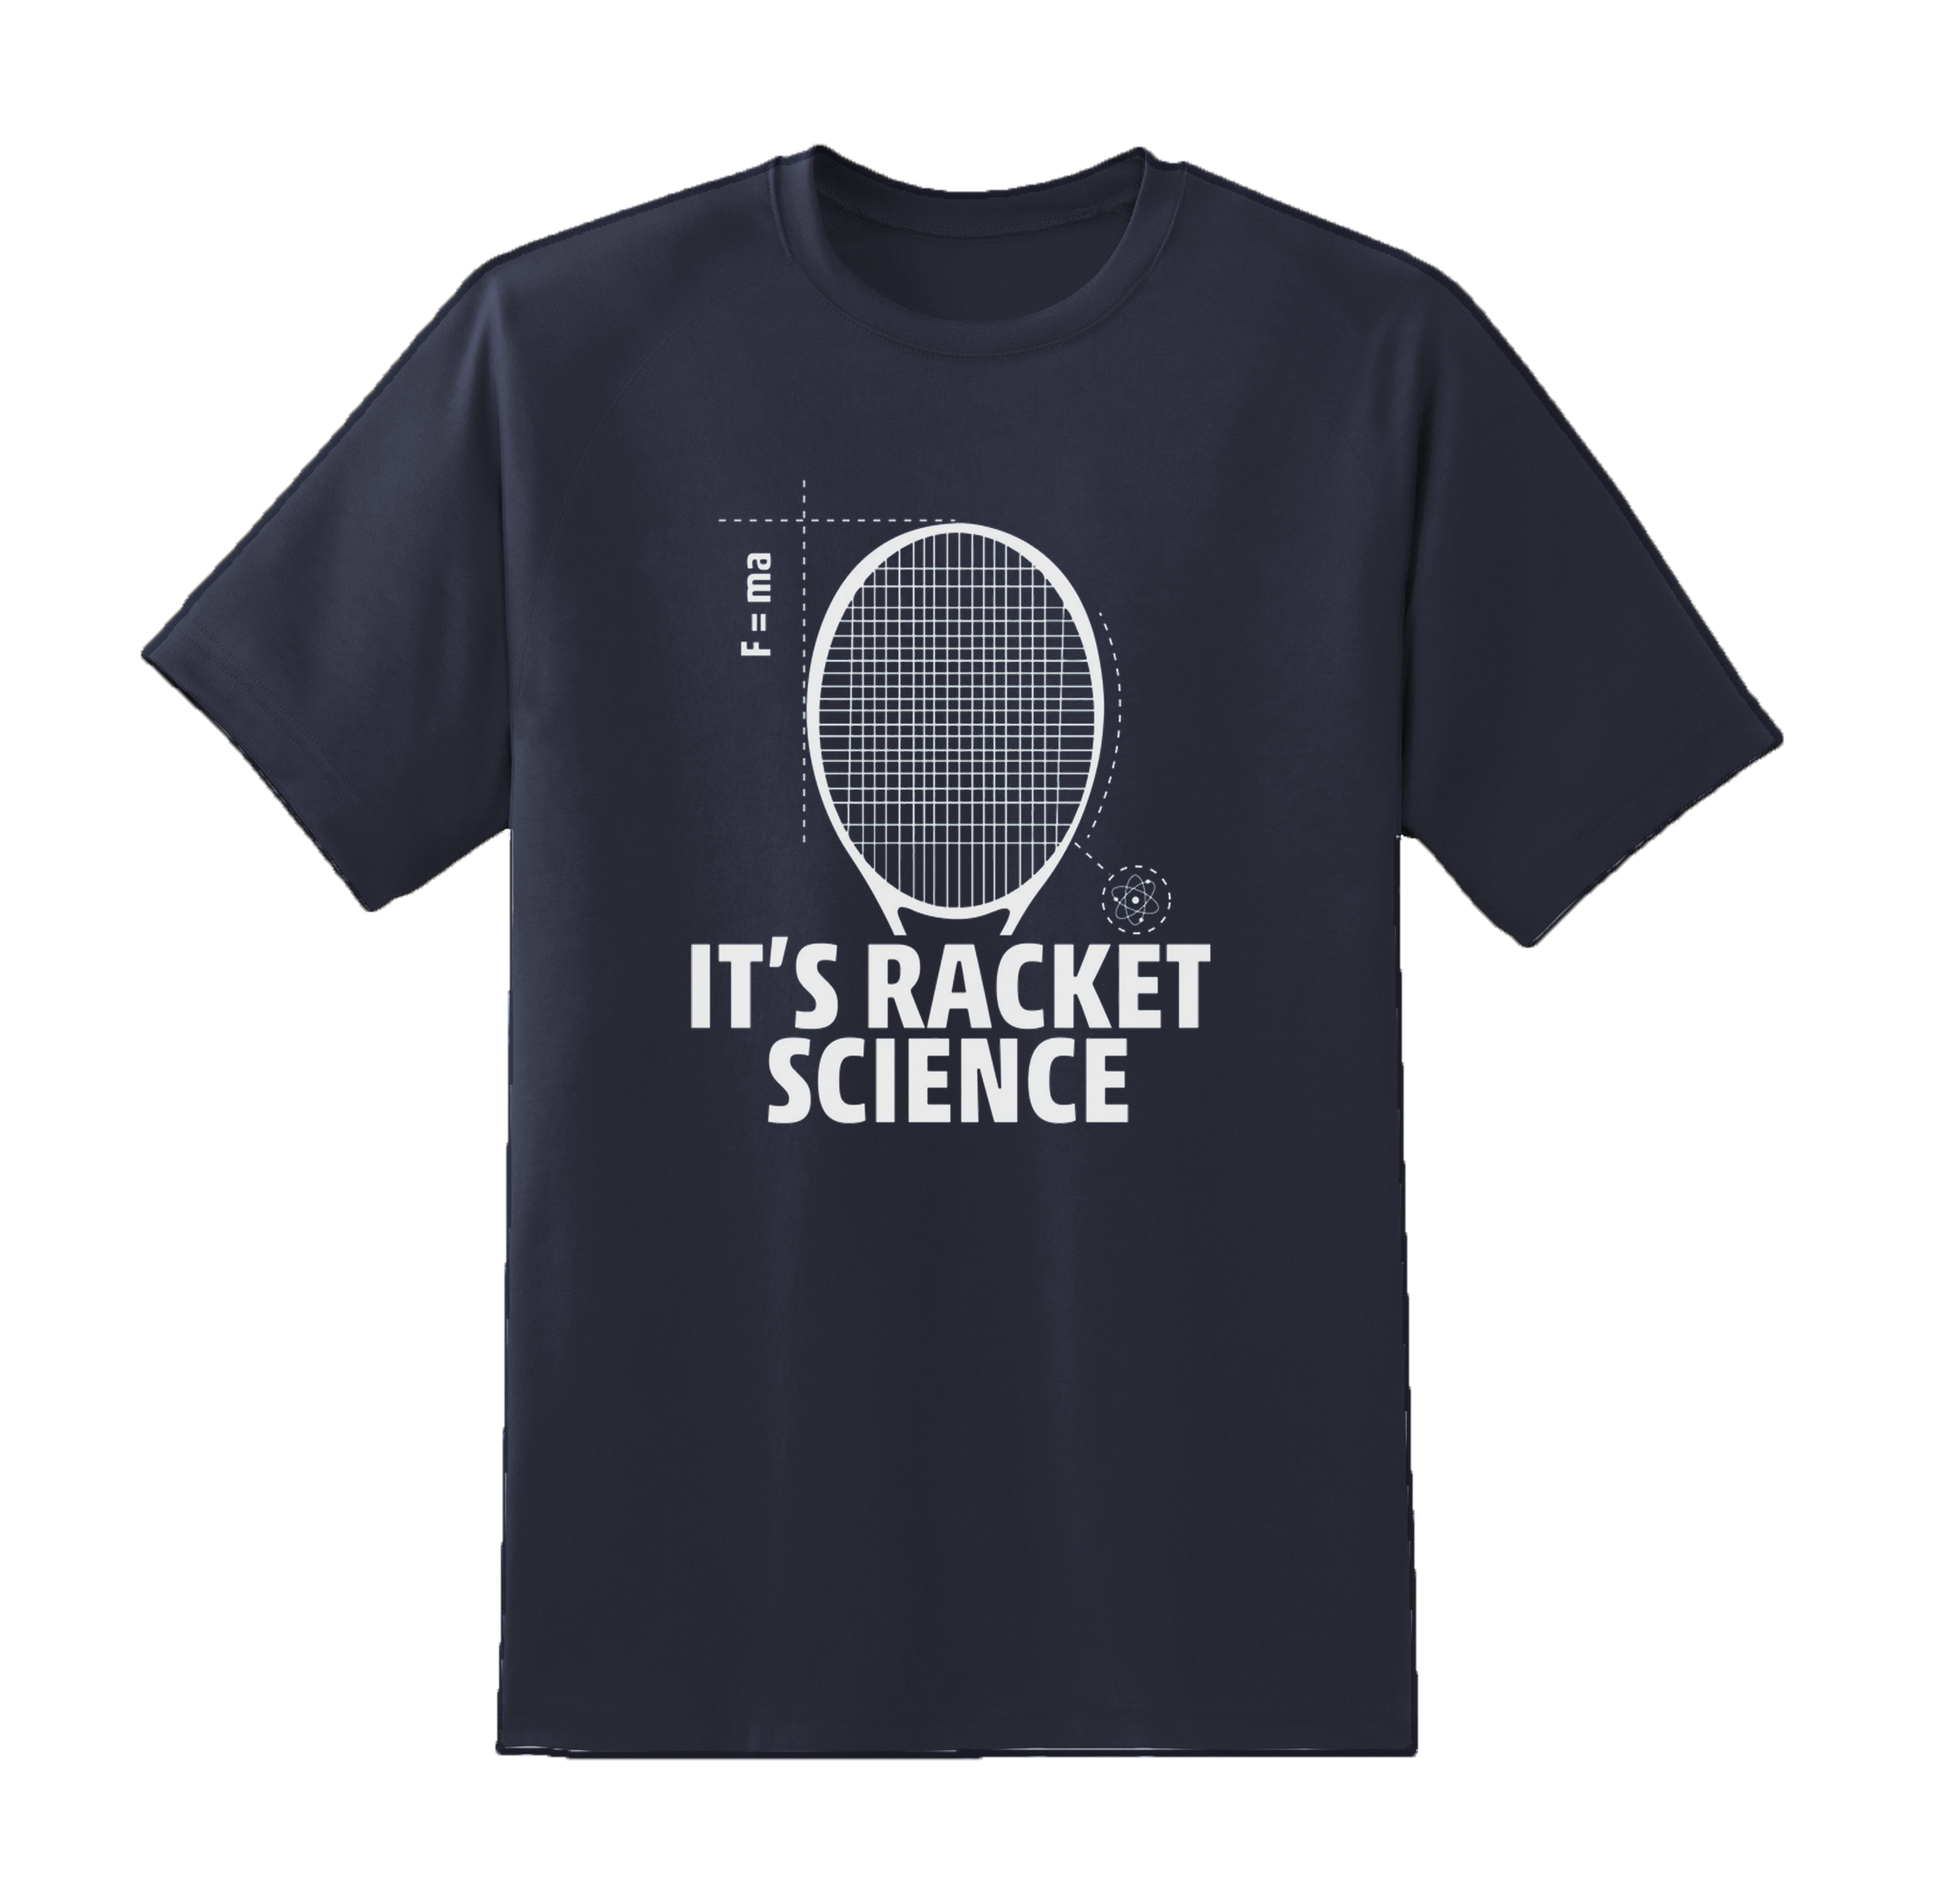 "Its Racket Science" Tee